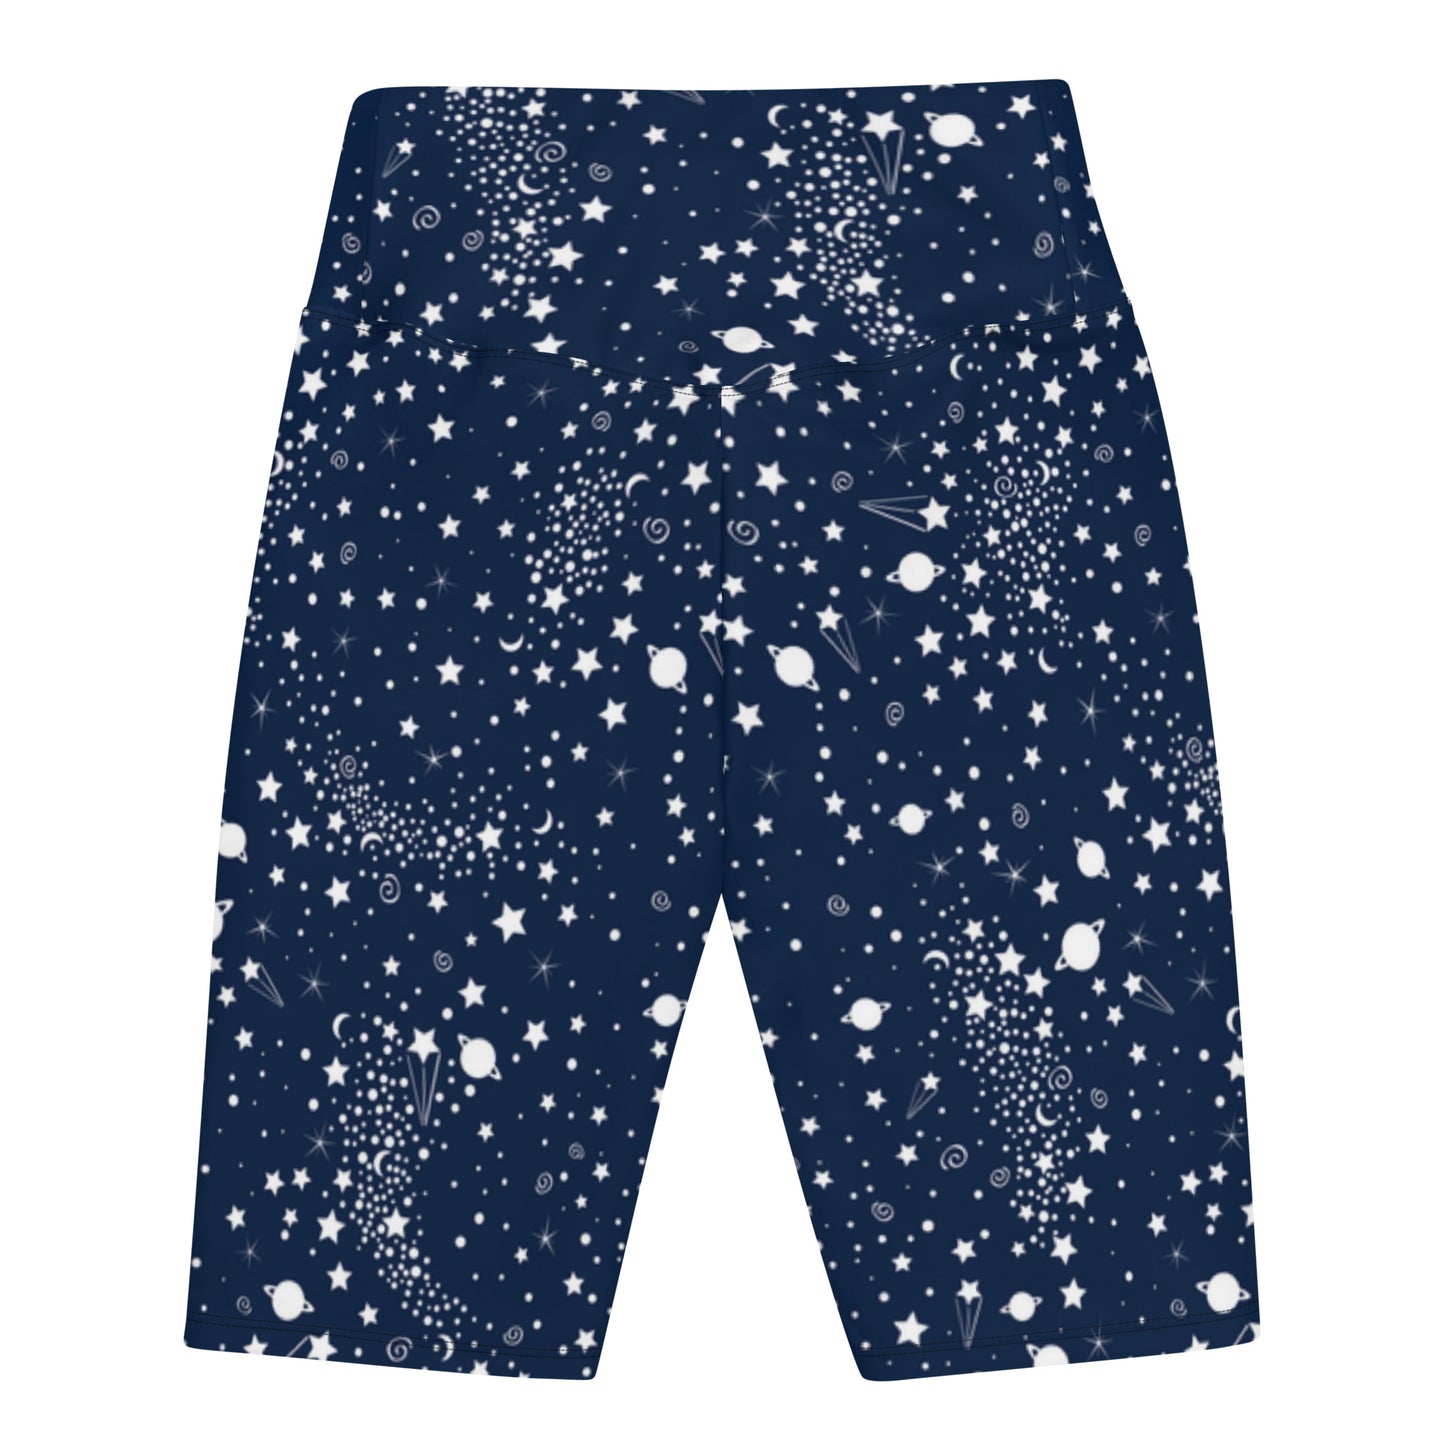 Stellar Blue Velocity High-Waisted Biker Shorts